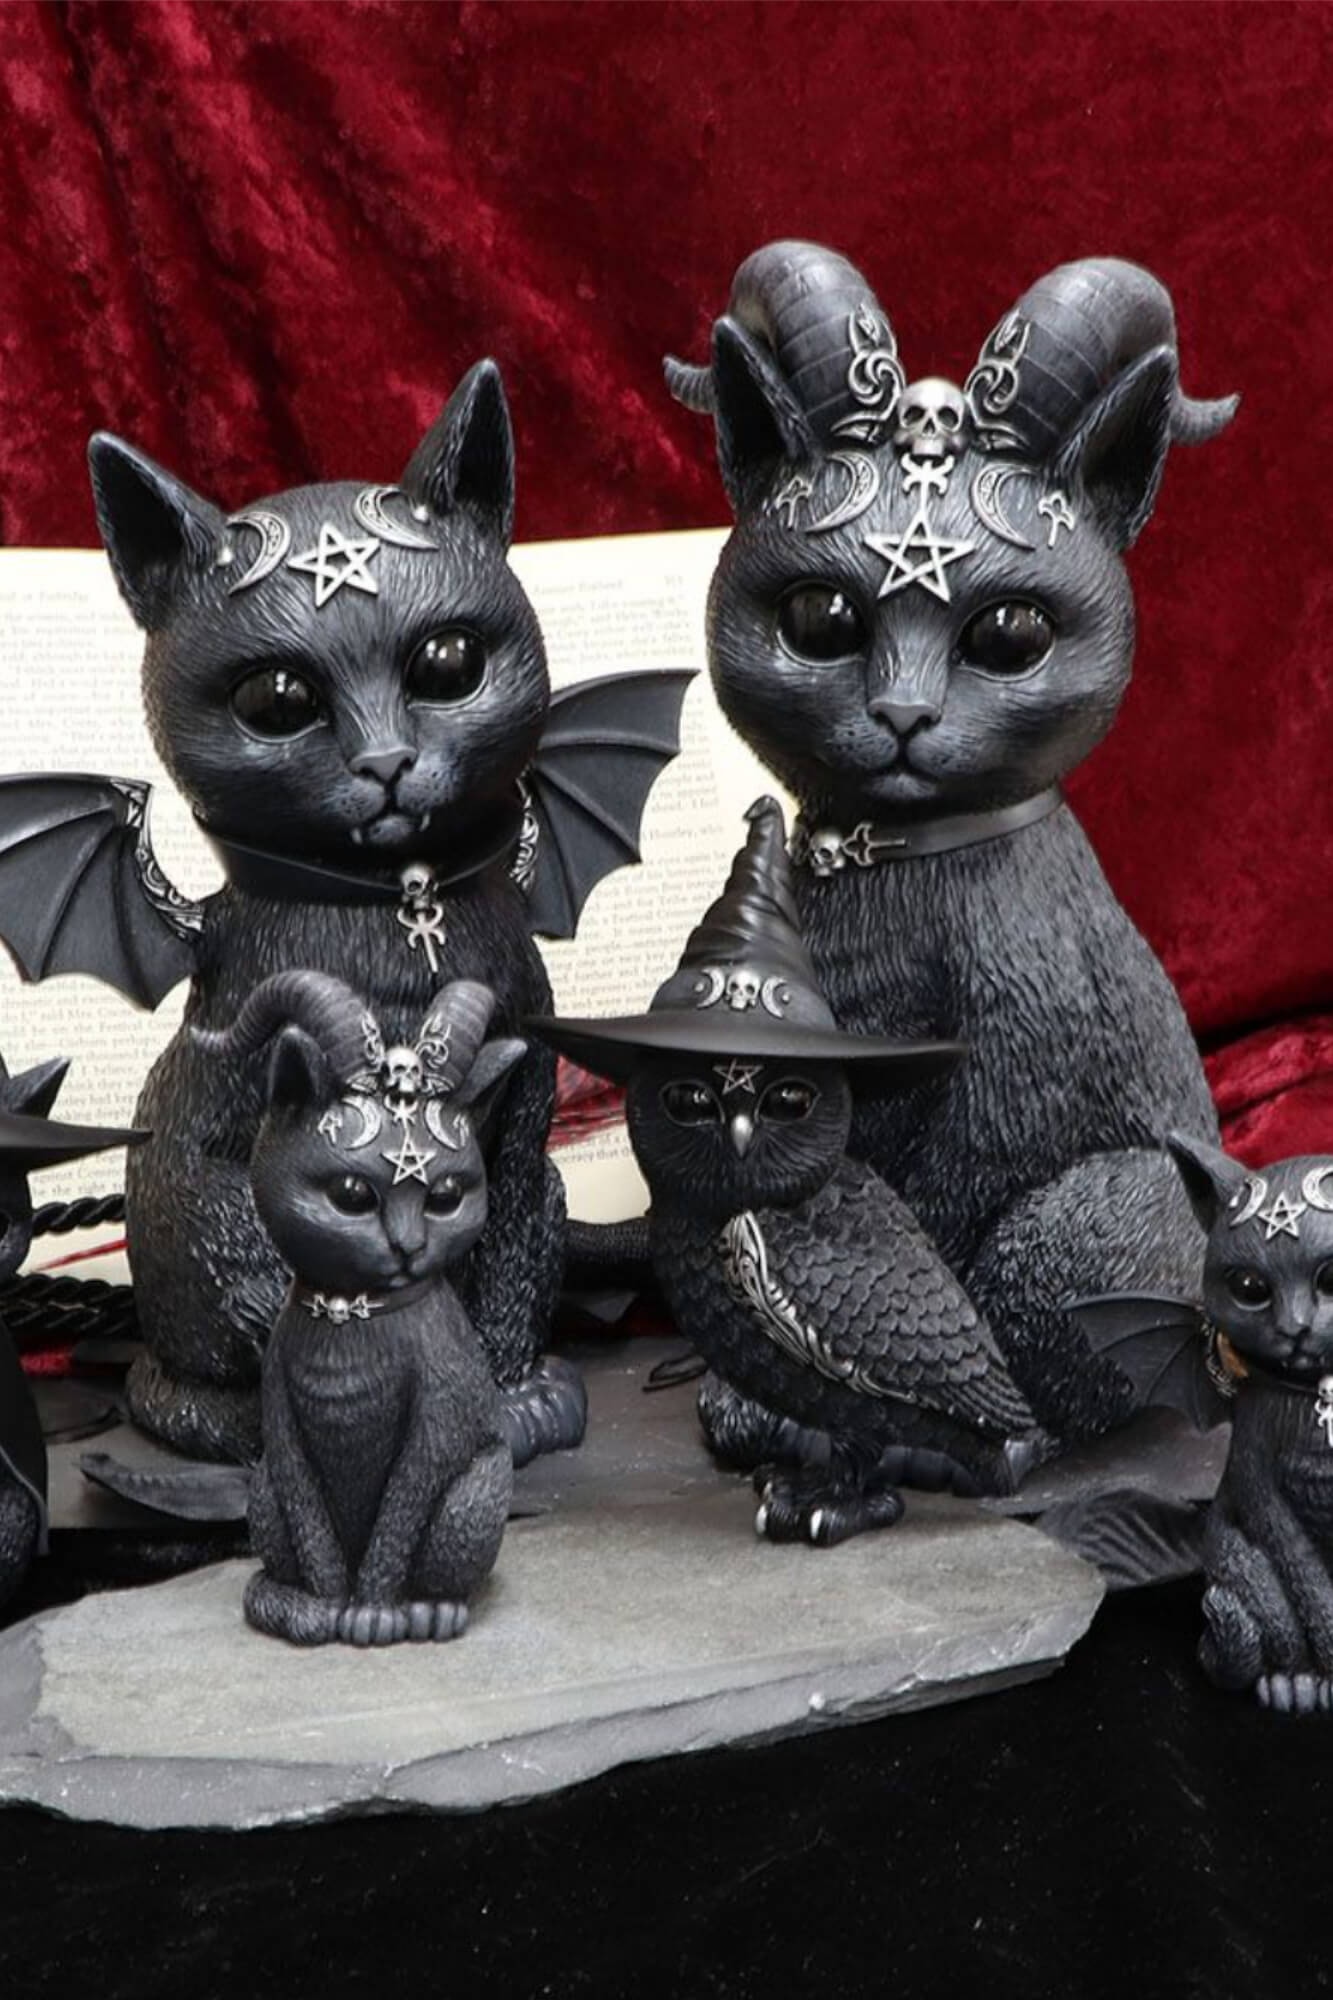 Nemesis Now Pawzuph Horned Occult Cat Figurine Ornament